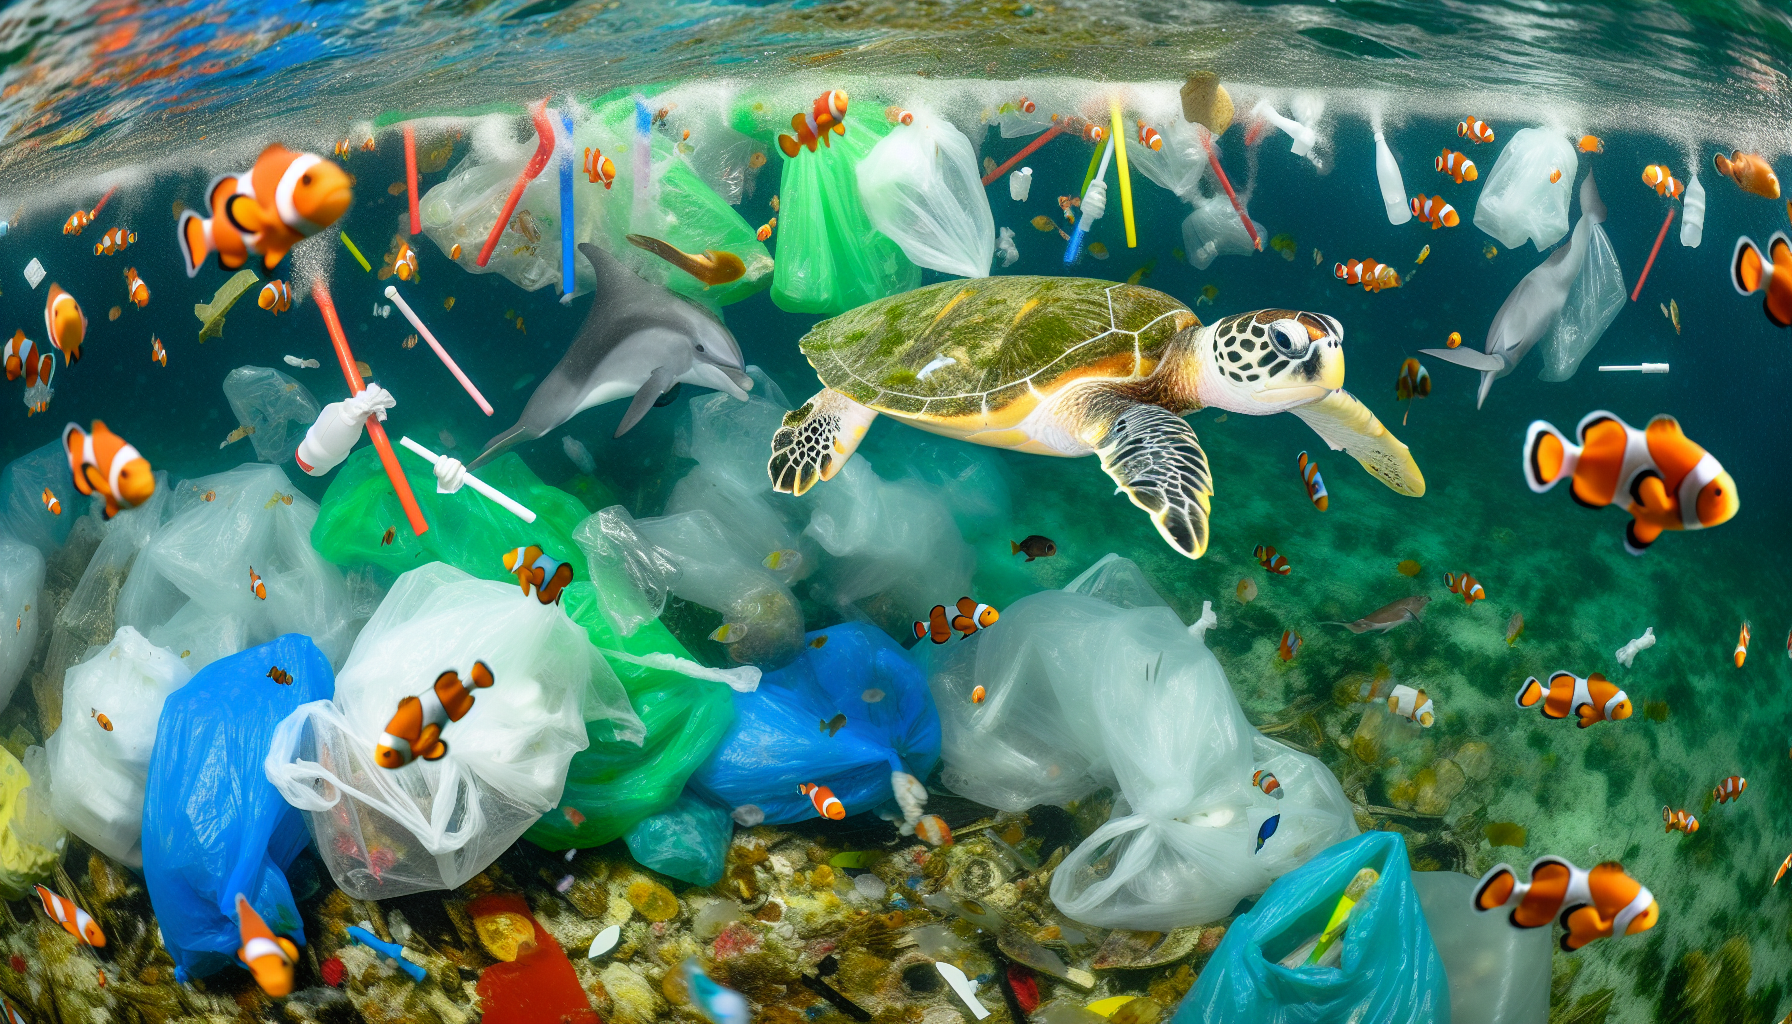 Plastic pollution in marine ecosystem